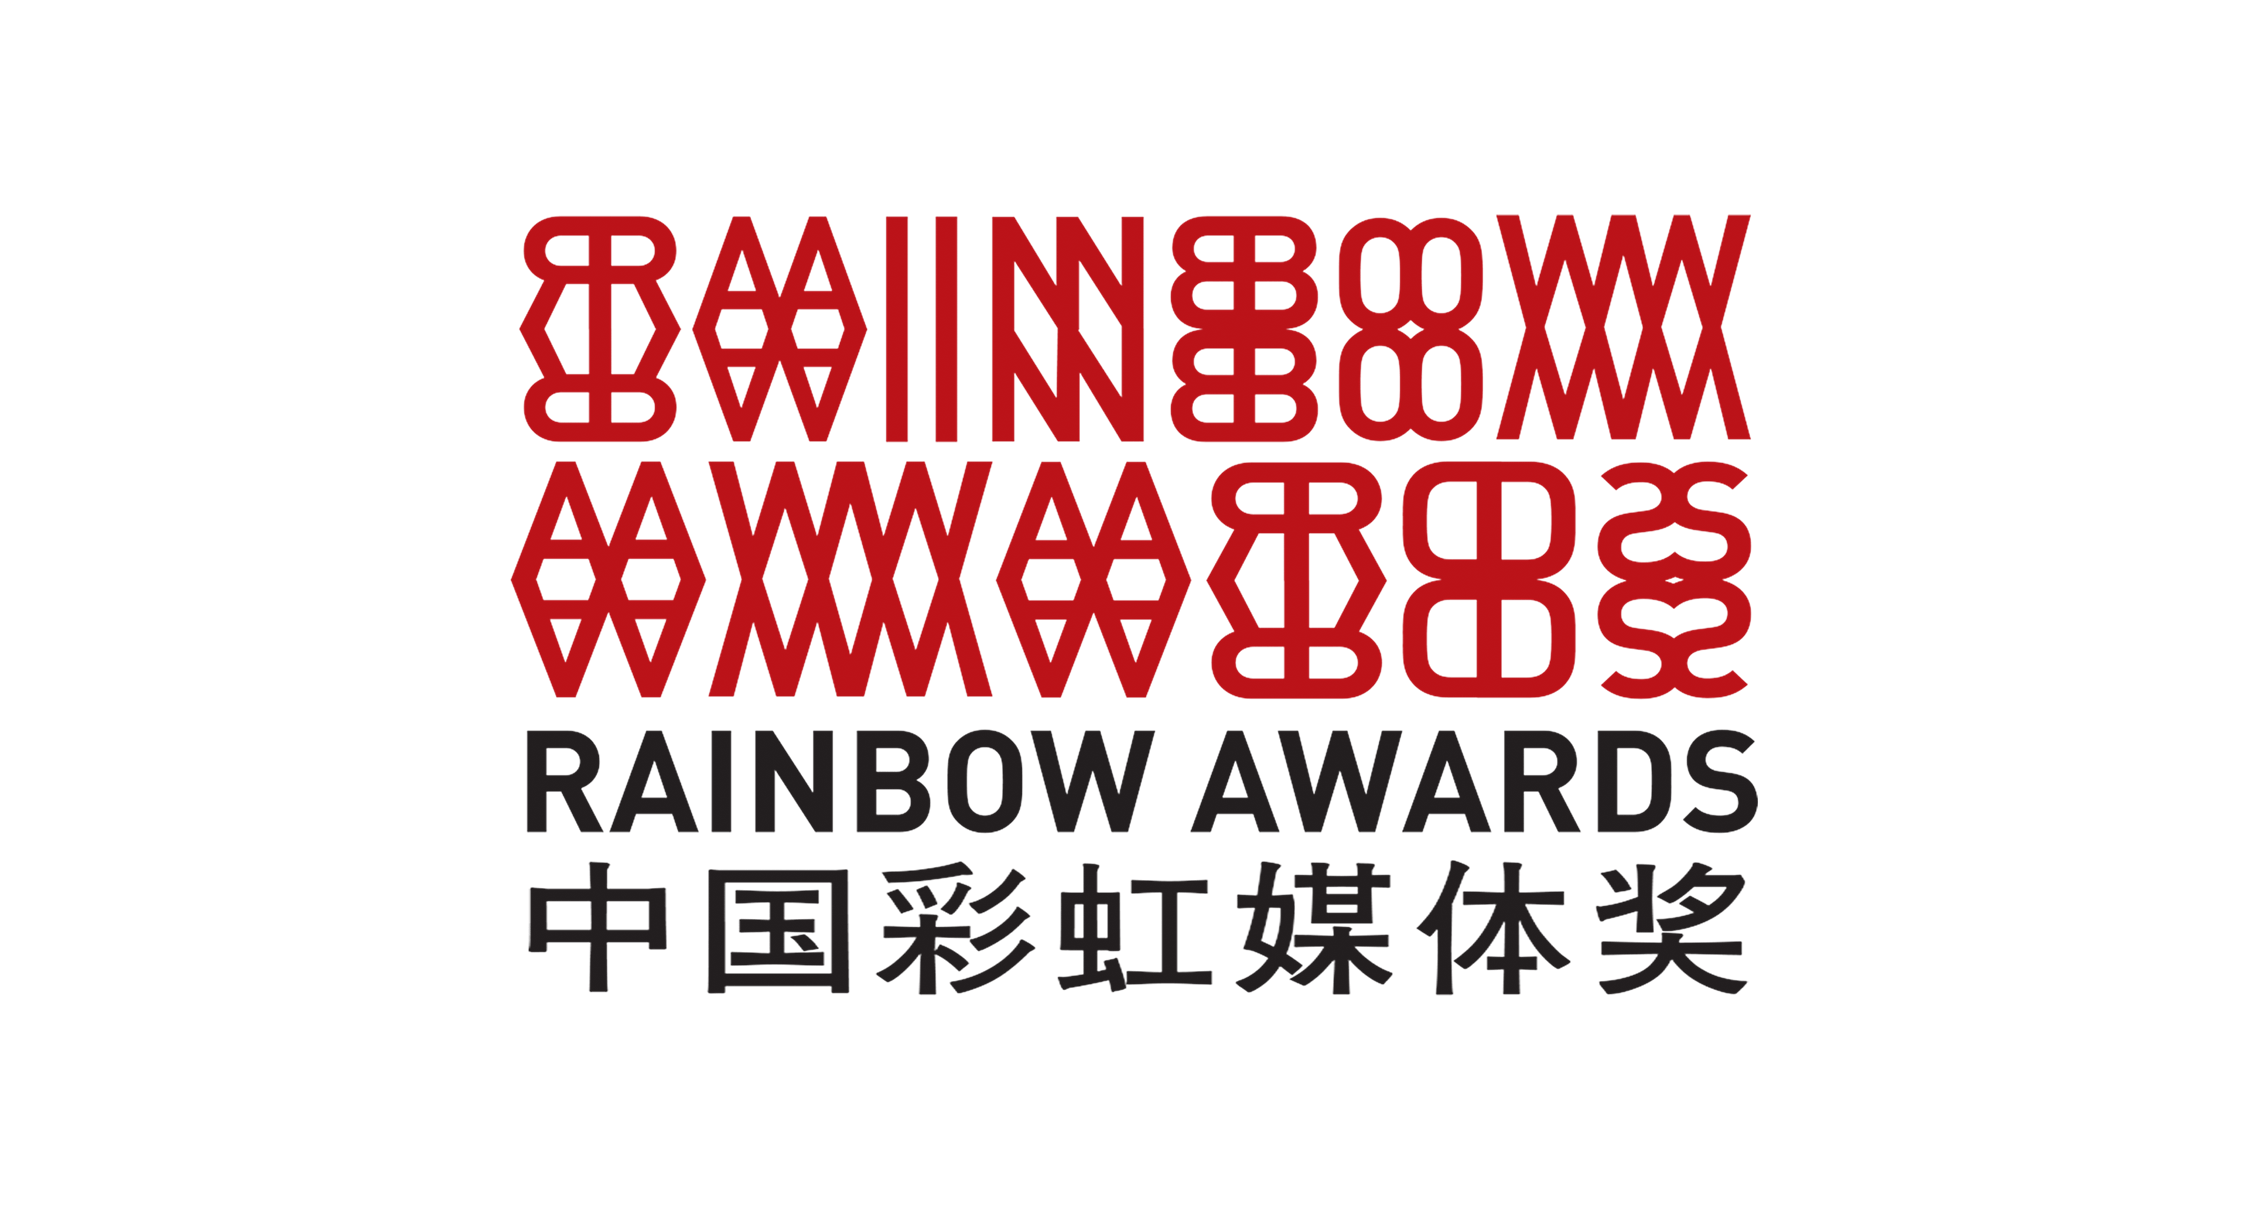 中国彩虹媒体奖 Rainbow Awards